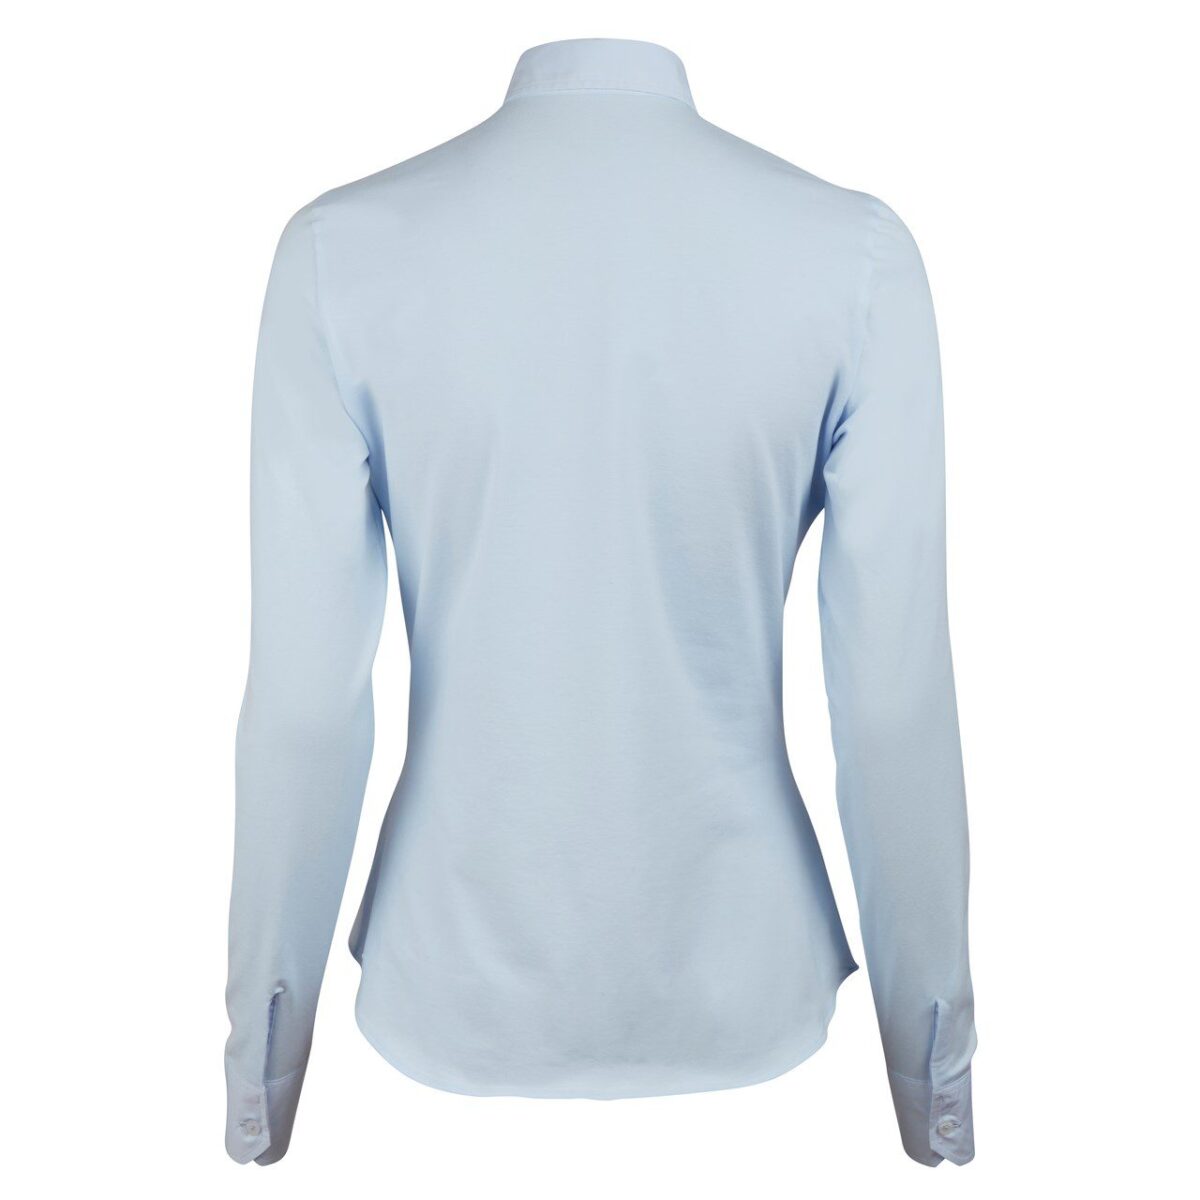 Stenstroems Salma Shirt Light Blue with Jersey back 1